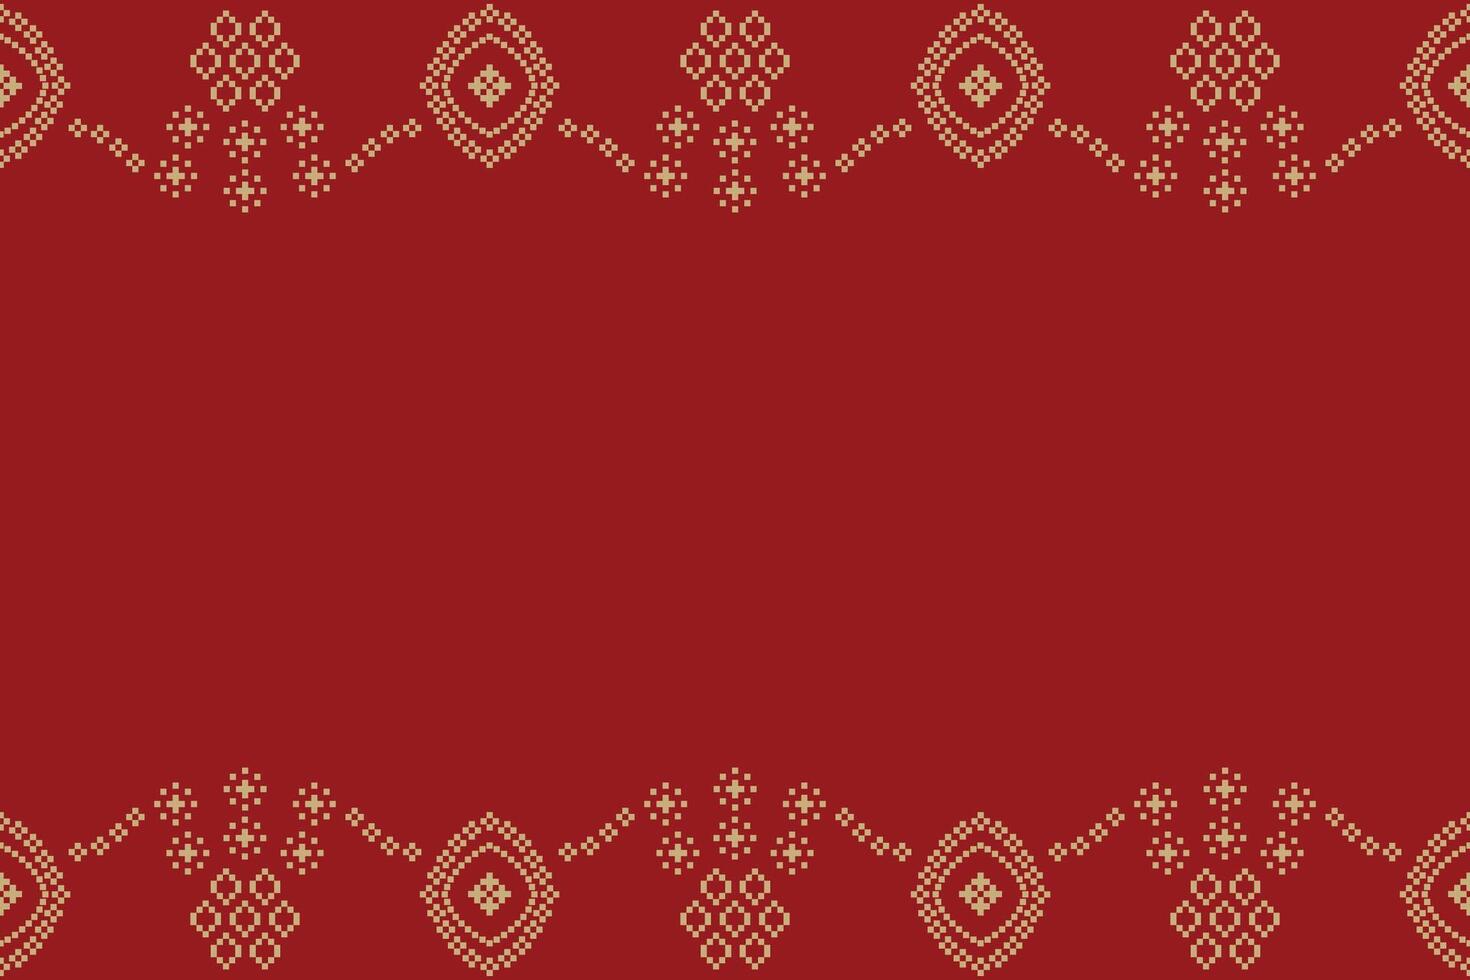 traditionell etnisk motiv ikat geometrisk tyg mönster korsa stitch.ikat broderi etnisk orientalisk pixel röd bakgrund. abstrakt, illustration. textur, jul, dekoration, tapeter. vektor